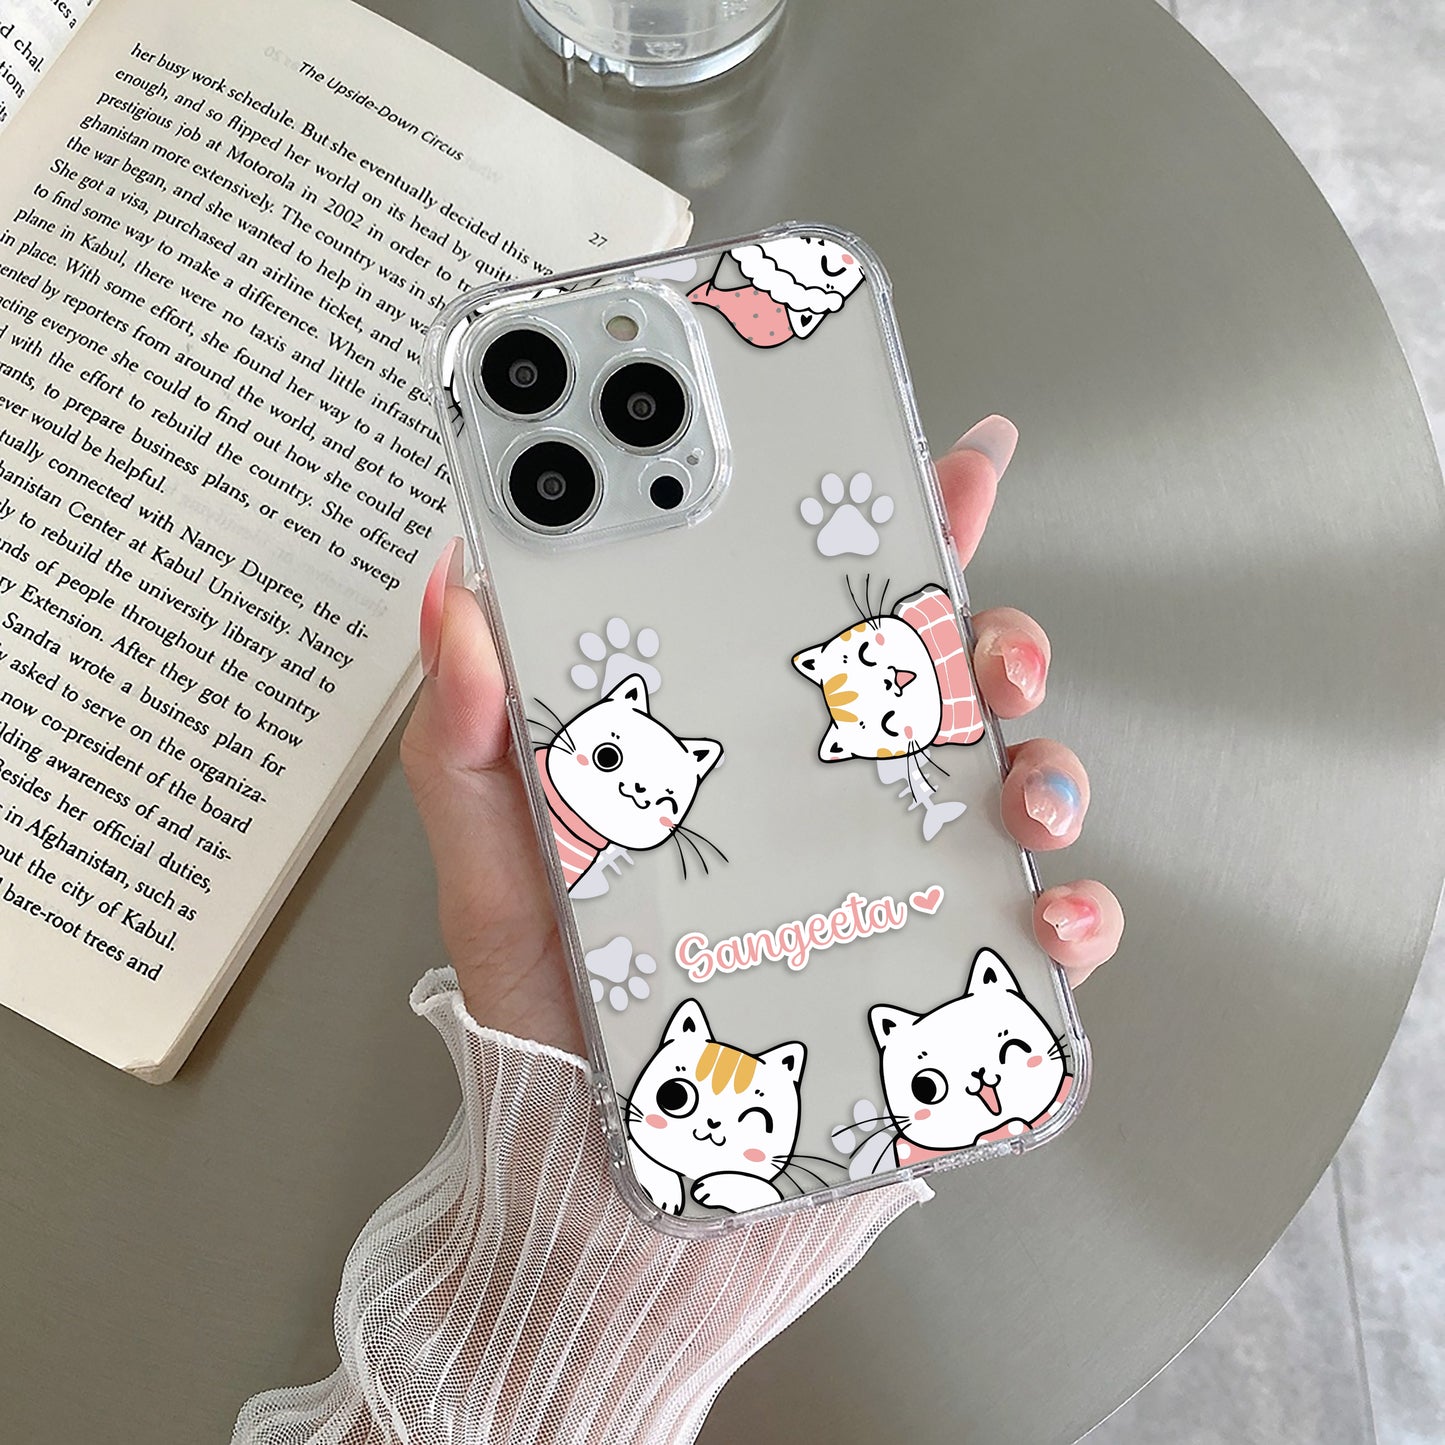 Cute Cat Customize Transparent Silicon Case For Redmi/Xiaomi